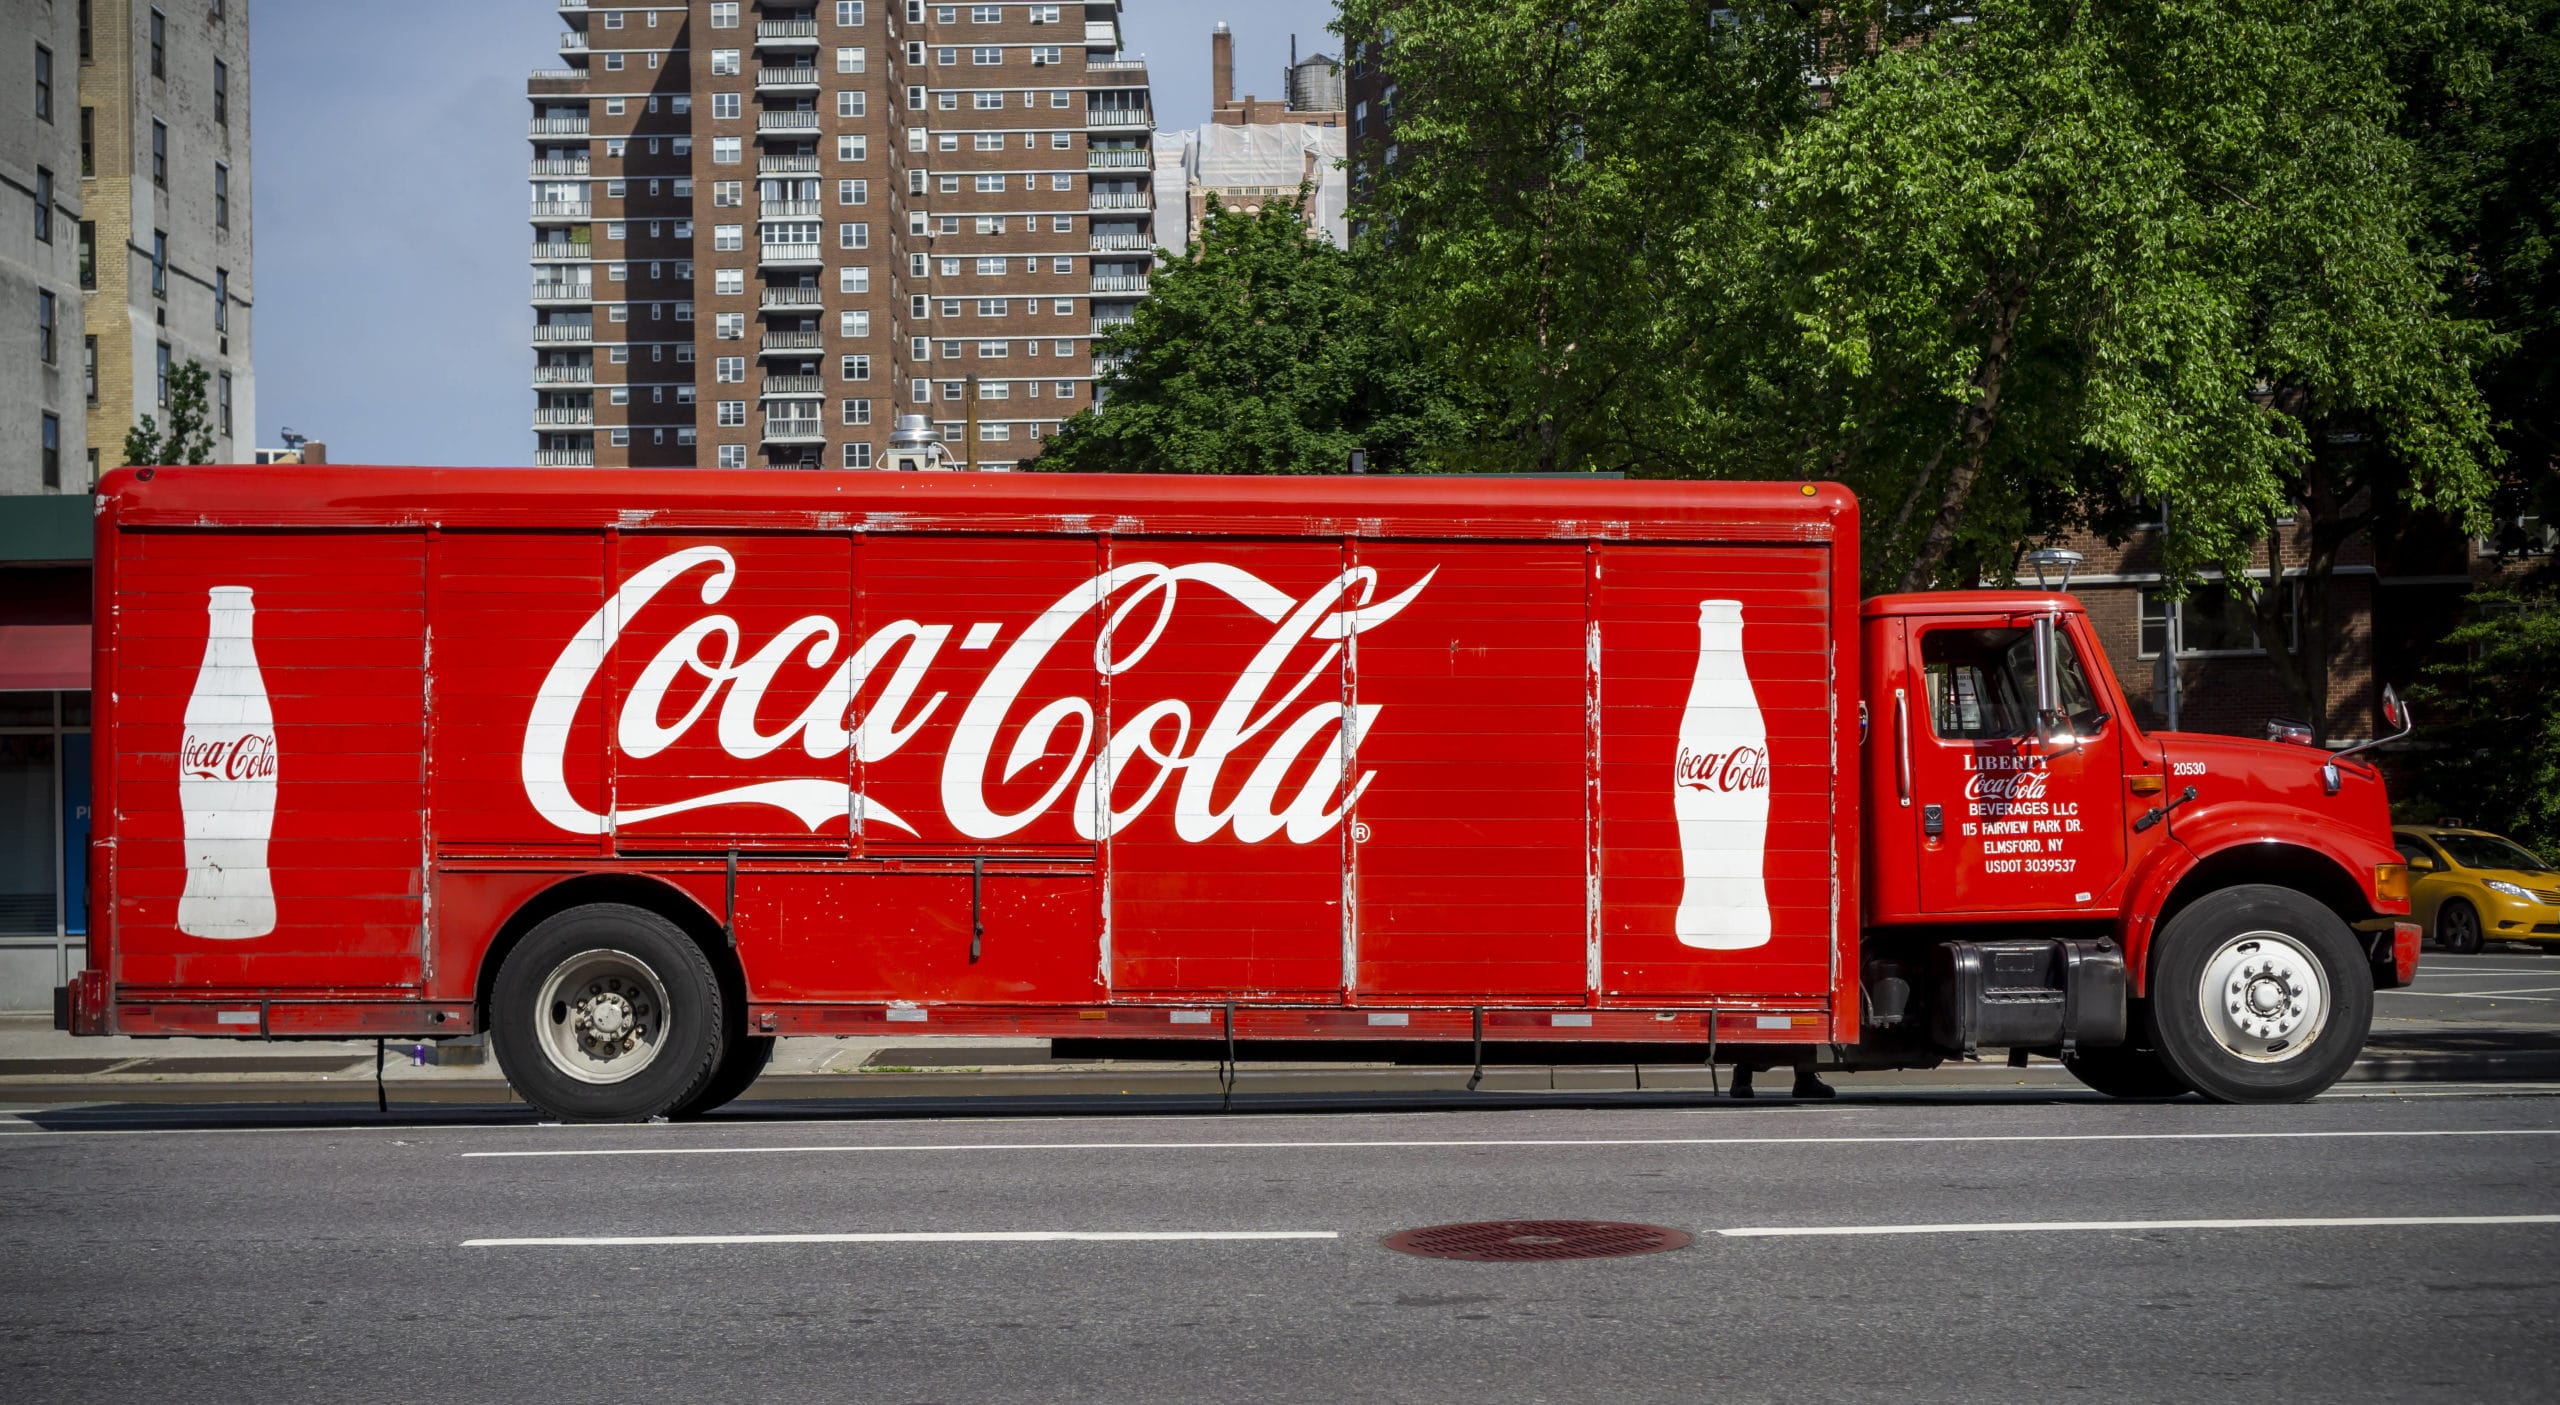 Coca-cola, le géant du soft-power américain, à New-York. Photo :  Richard B. Levine/Newscom/SIPA SIPAUSA31532913_000001